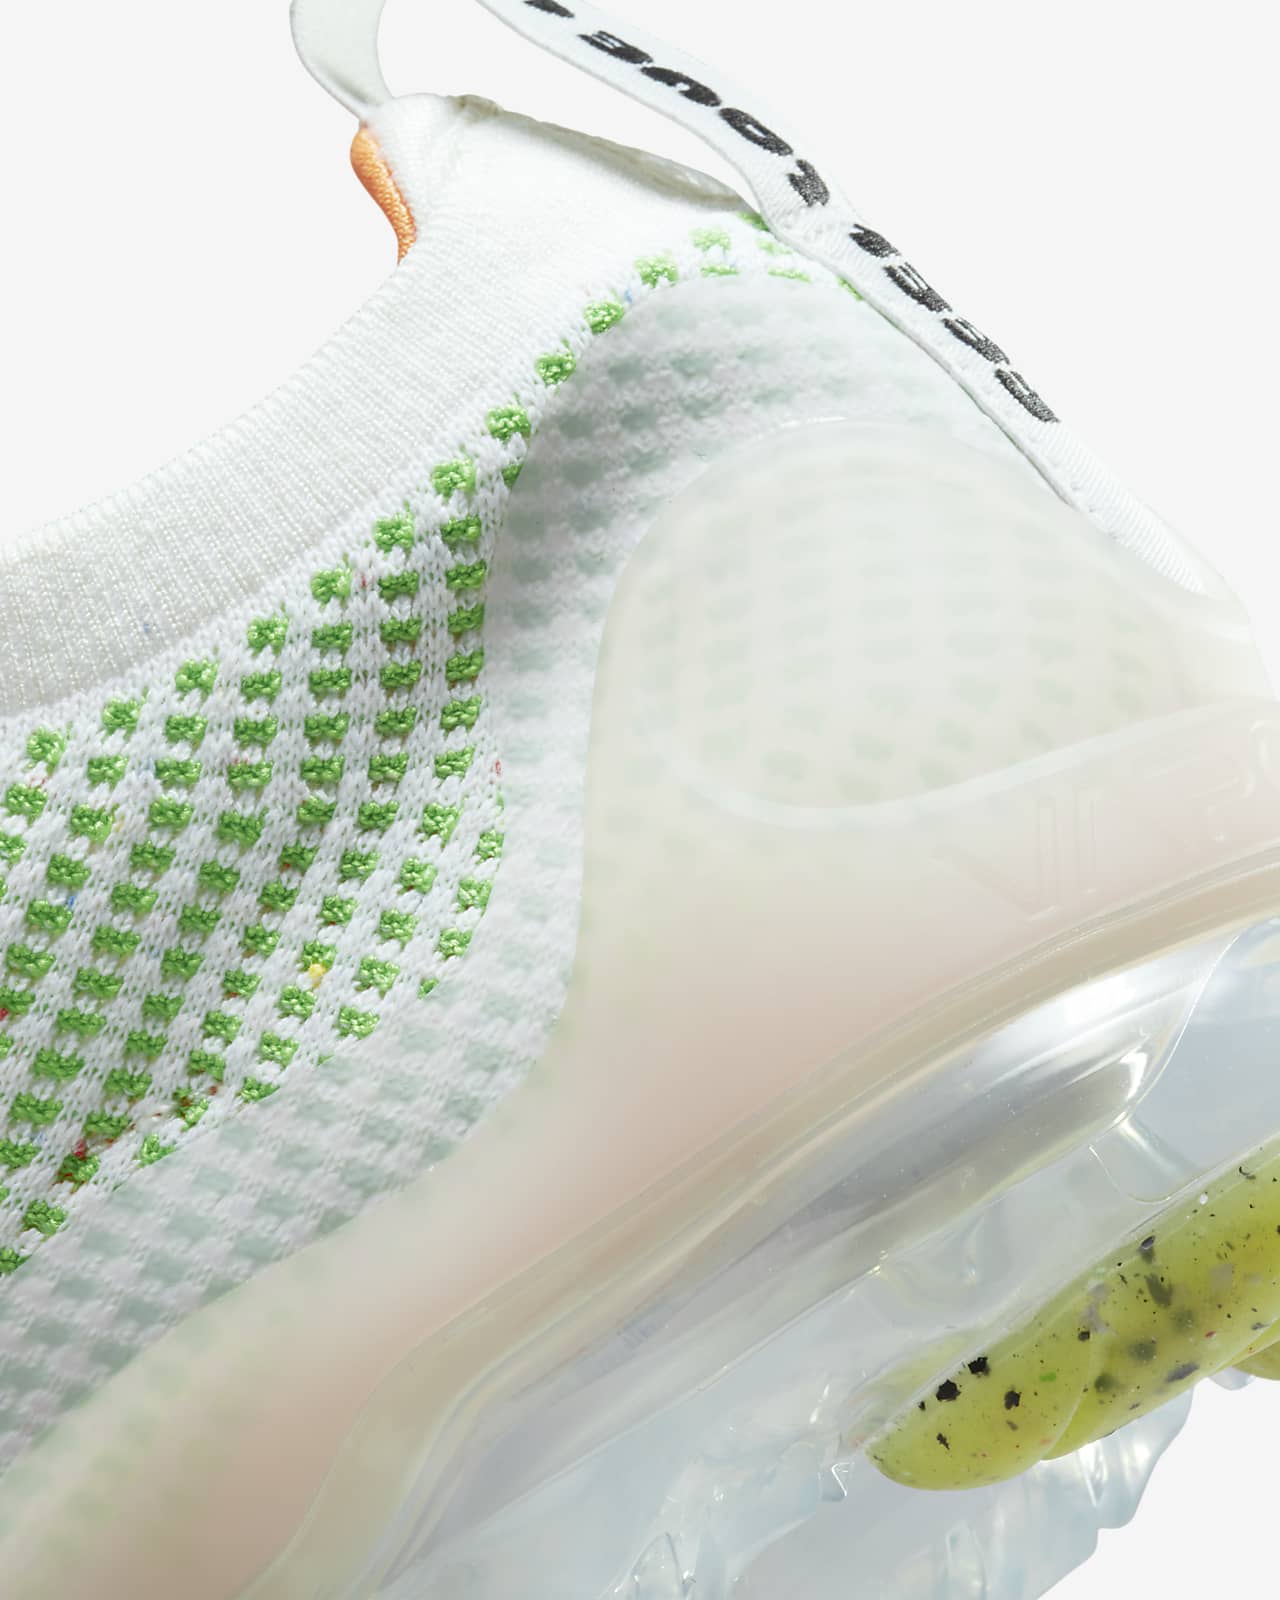 Nike VaporMax 2021 Flyknit Next Women's Shoes.